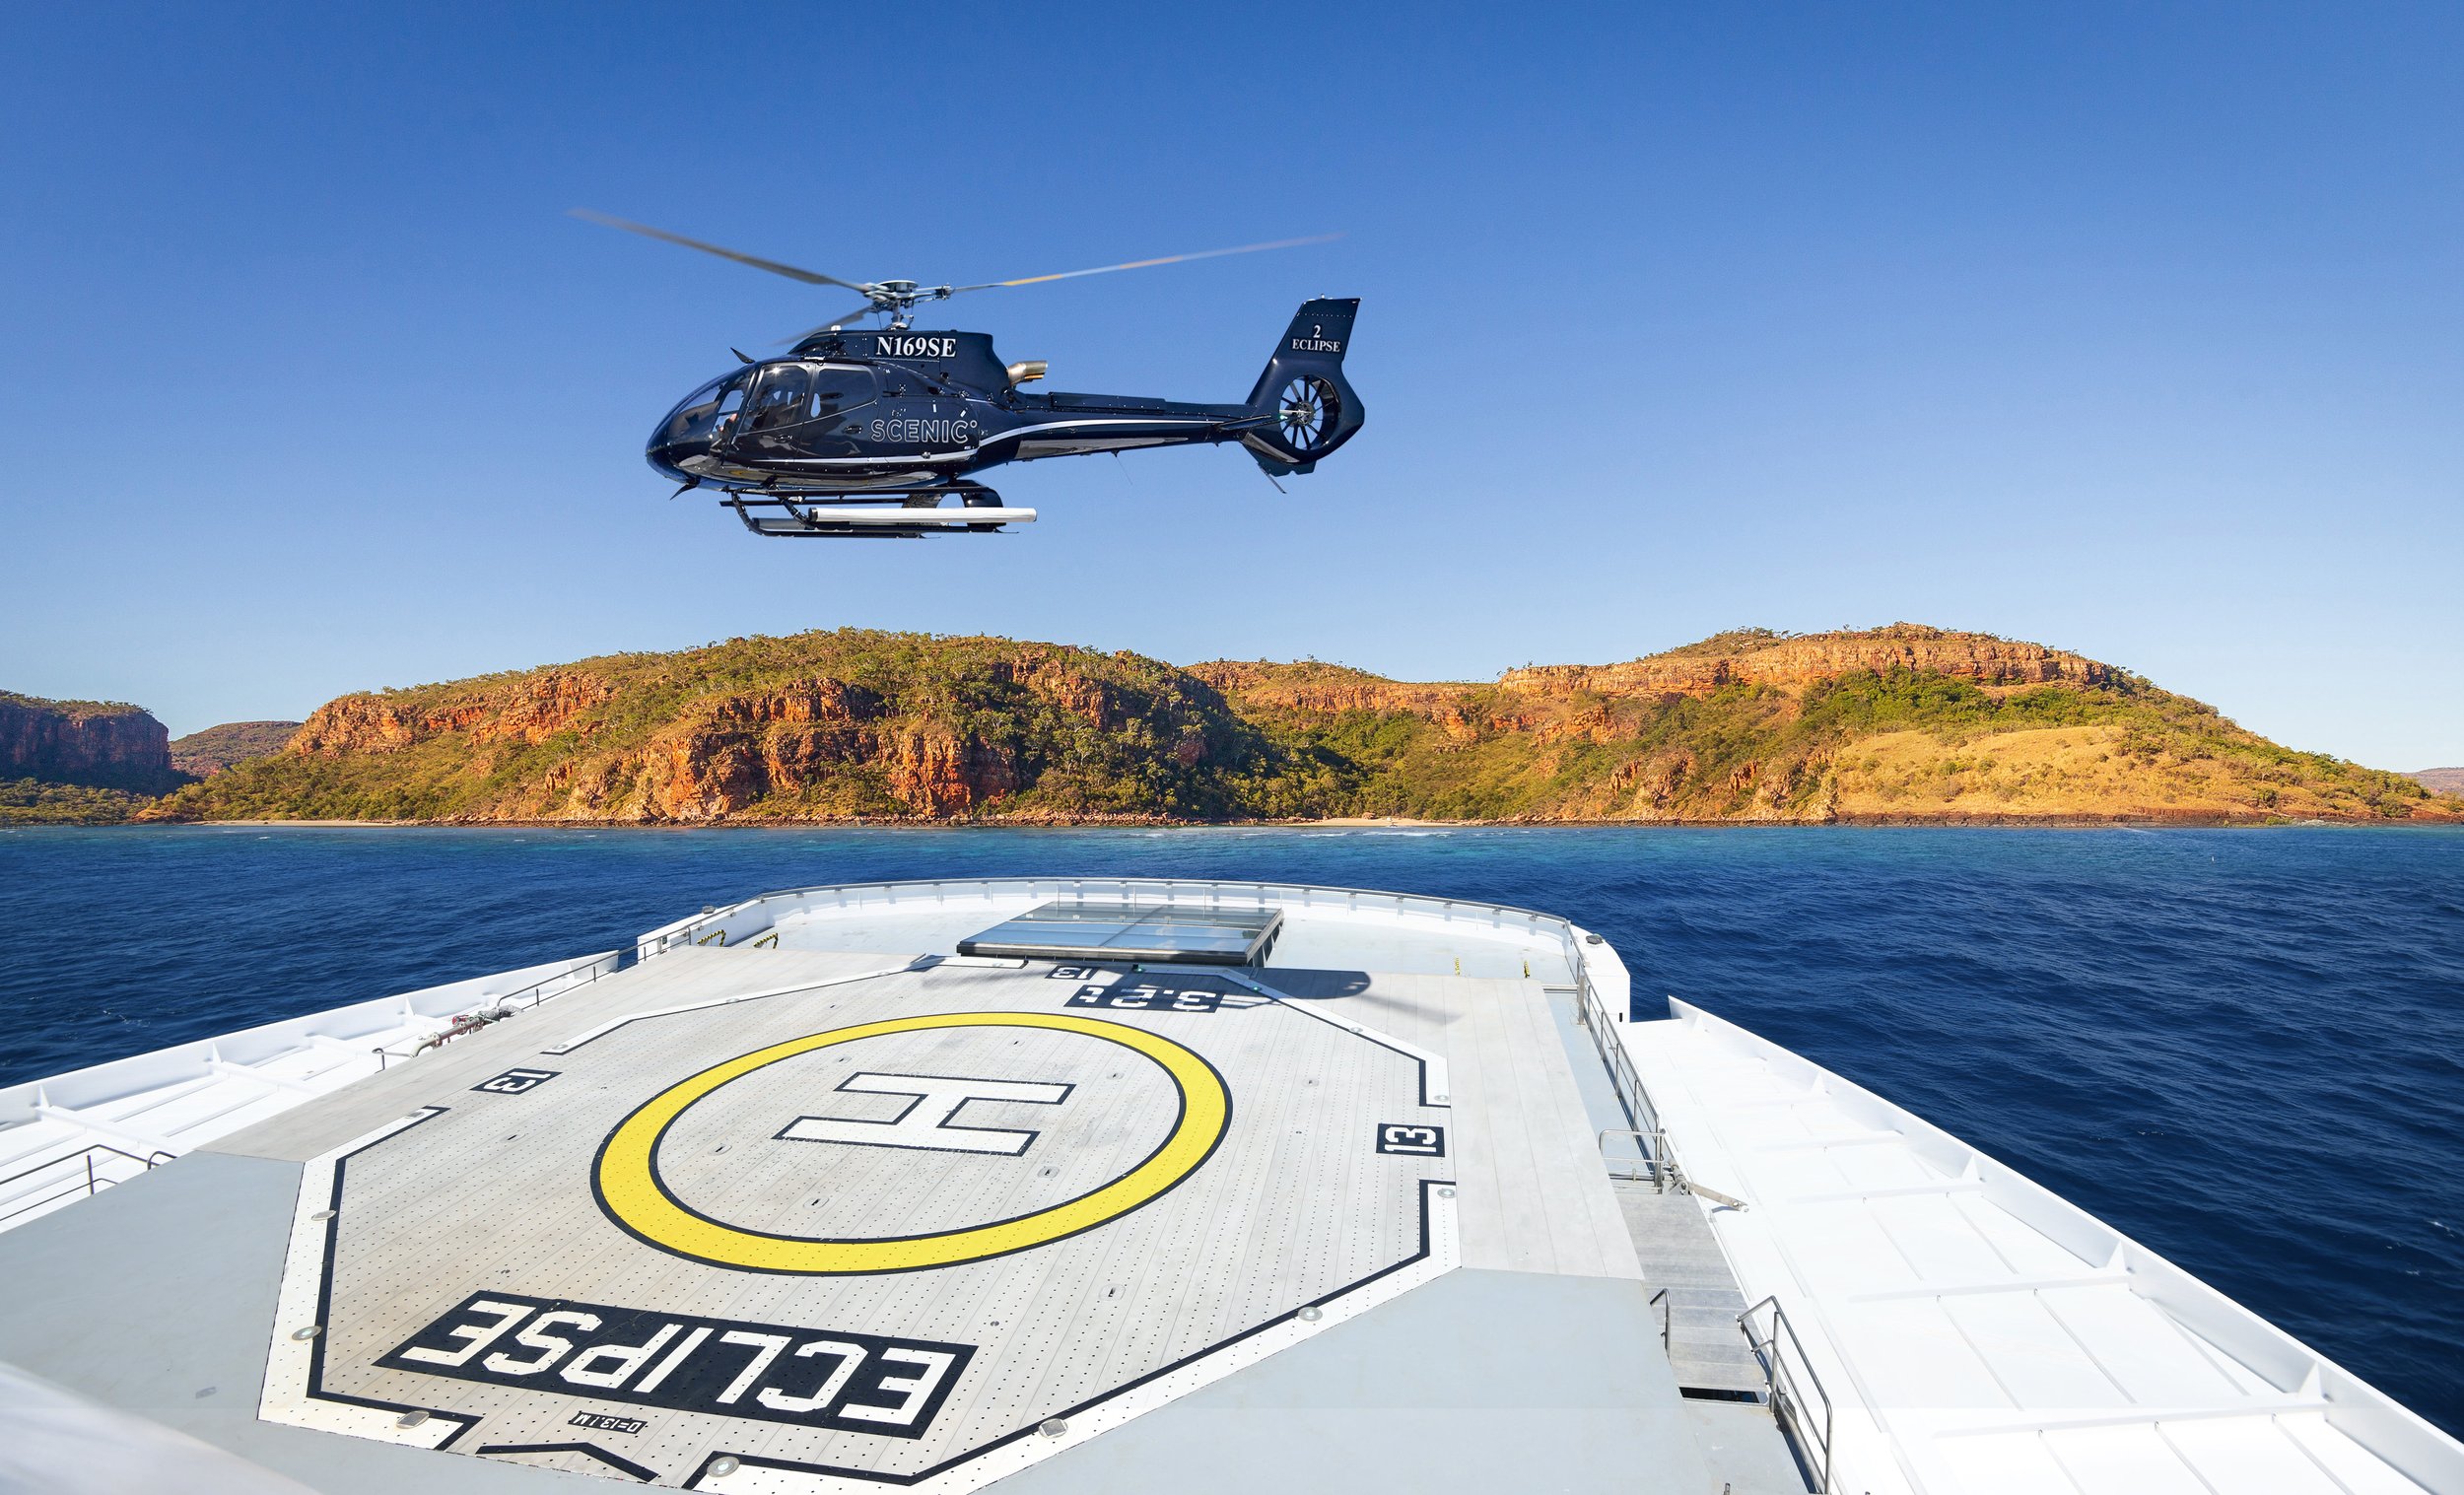 Scenic_Eclipse Helicopter_Heli Deck Kimberley.jpg